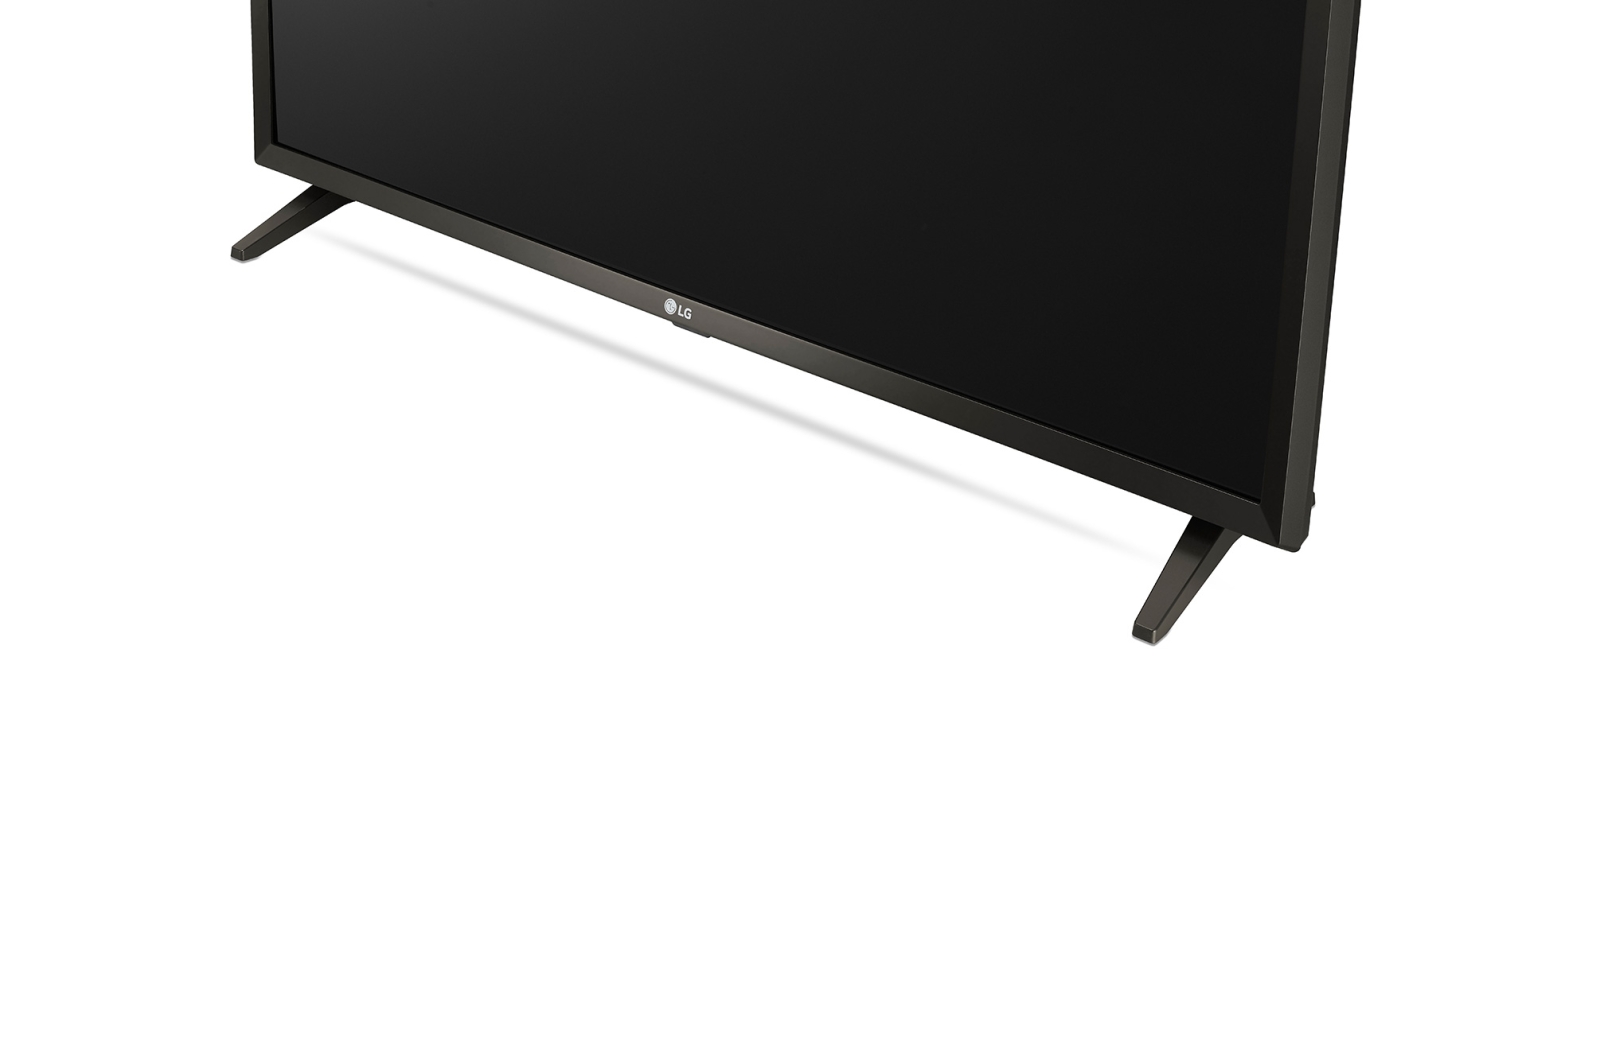 LG 32" HD Digital LED TV - 32LK510BPVD